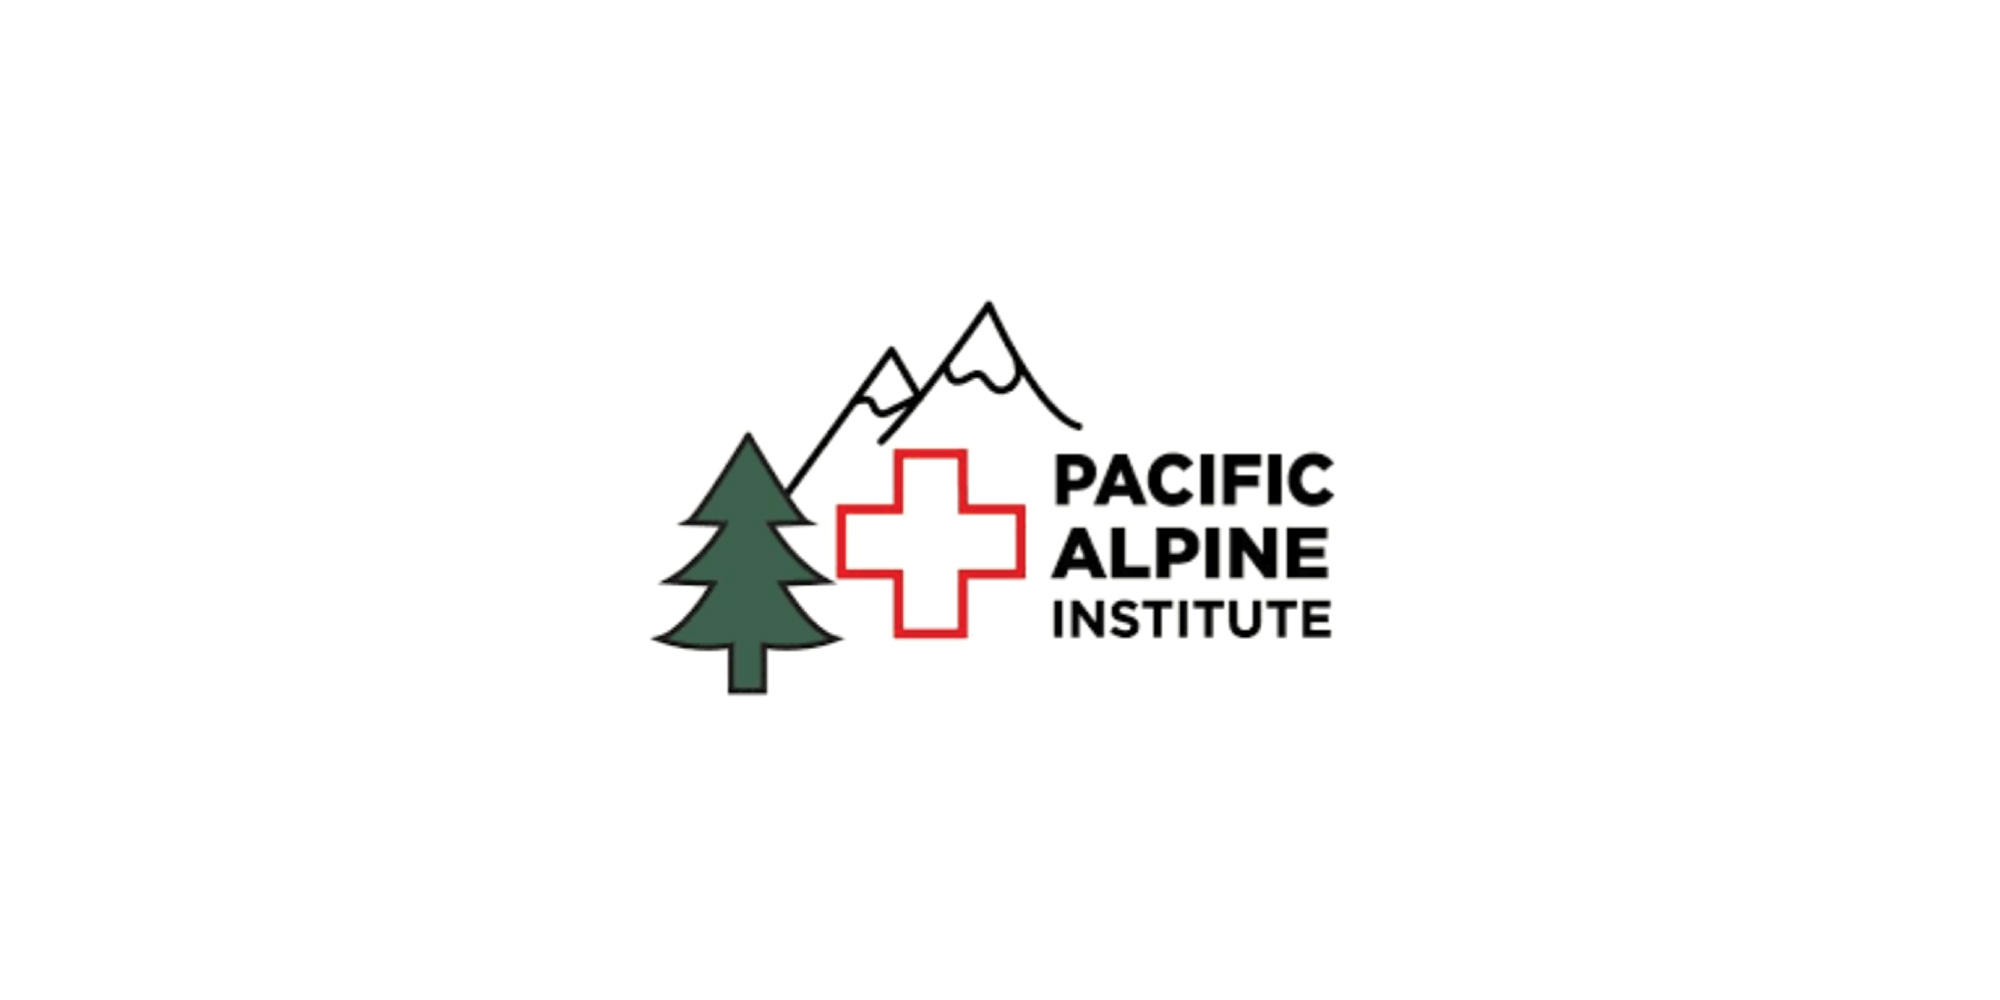 https://canadianoutdoormed.com/wp-content/uploads/2021/10/Pacific-Alpine-Institute-Header.jpg